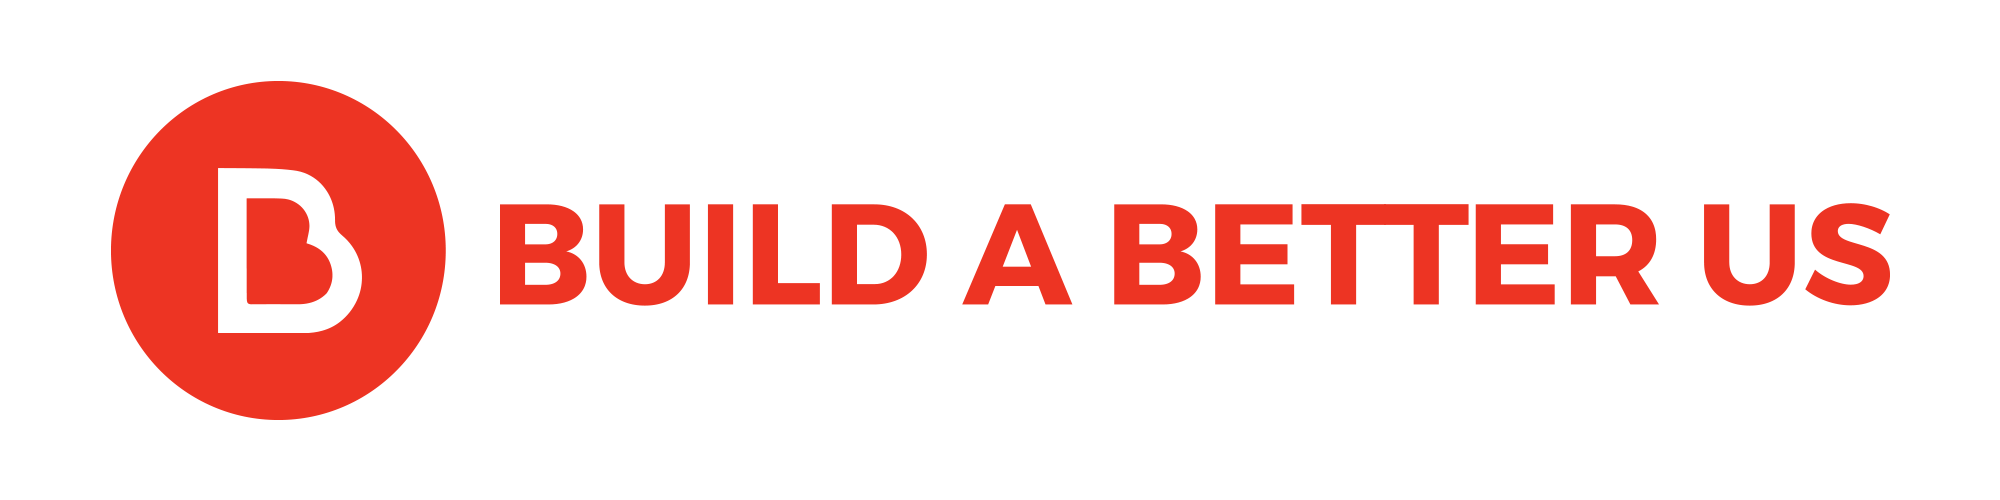 Build a Better Us logo